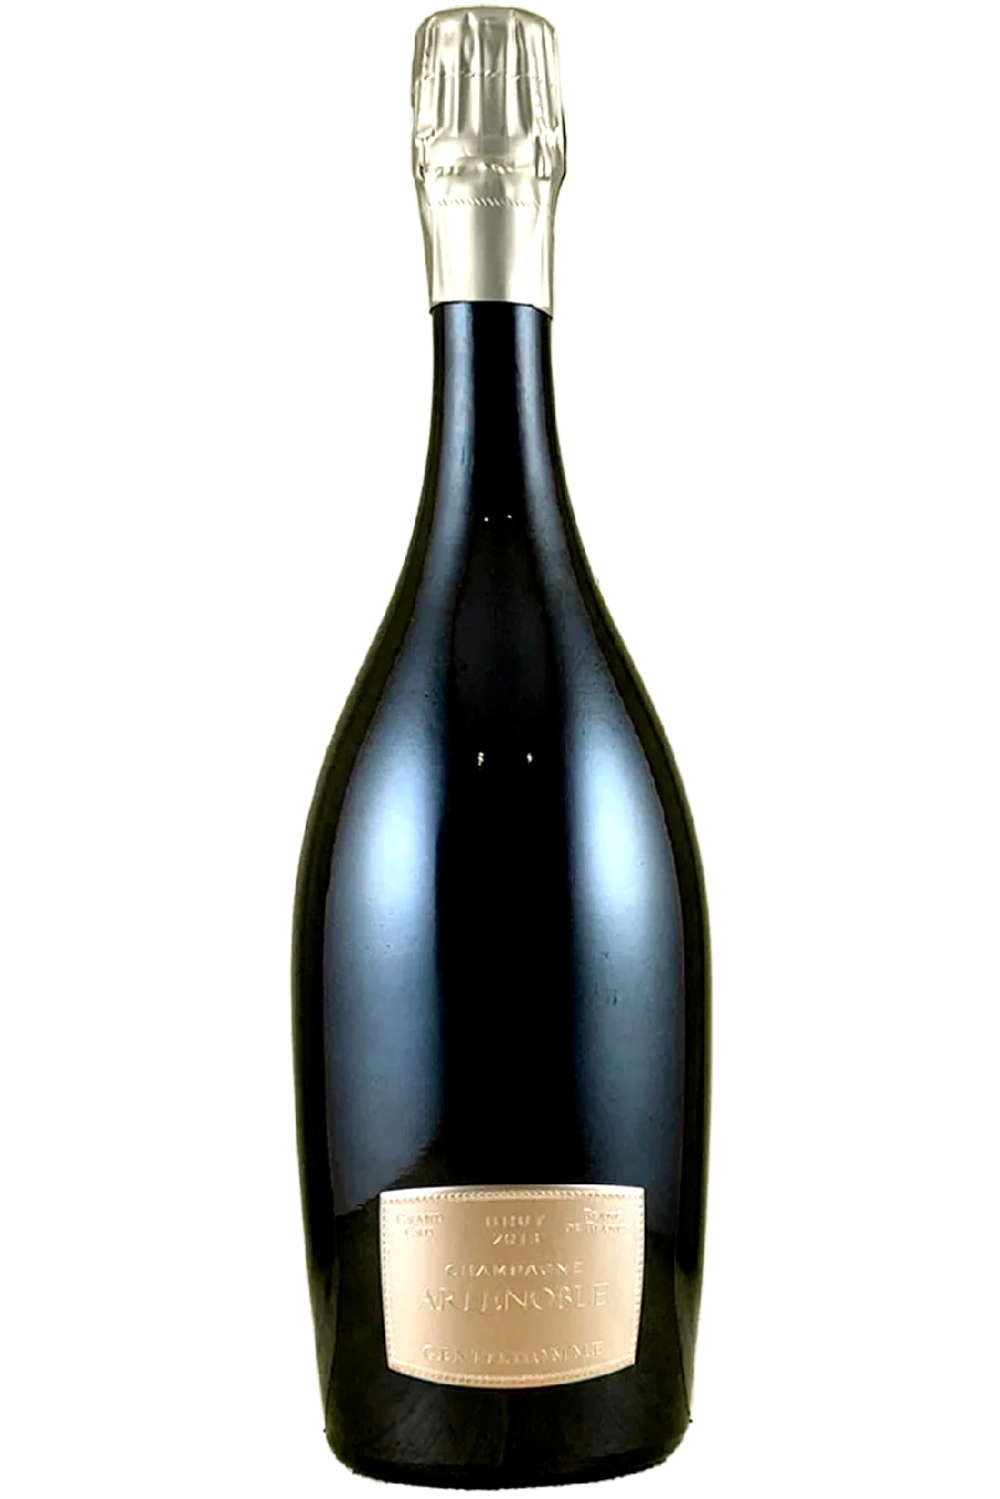 WineVins Champagne AR Lenoble Grand Cuvée Gentilhomme